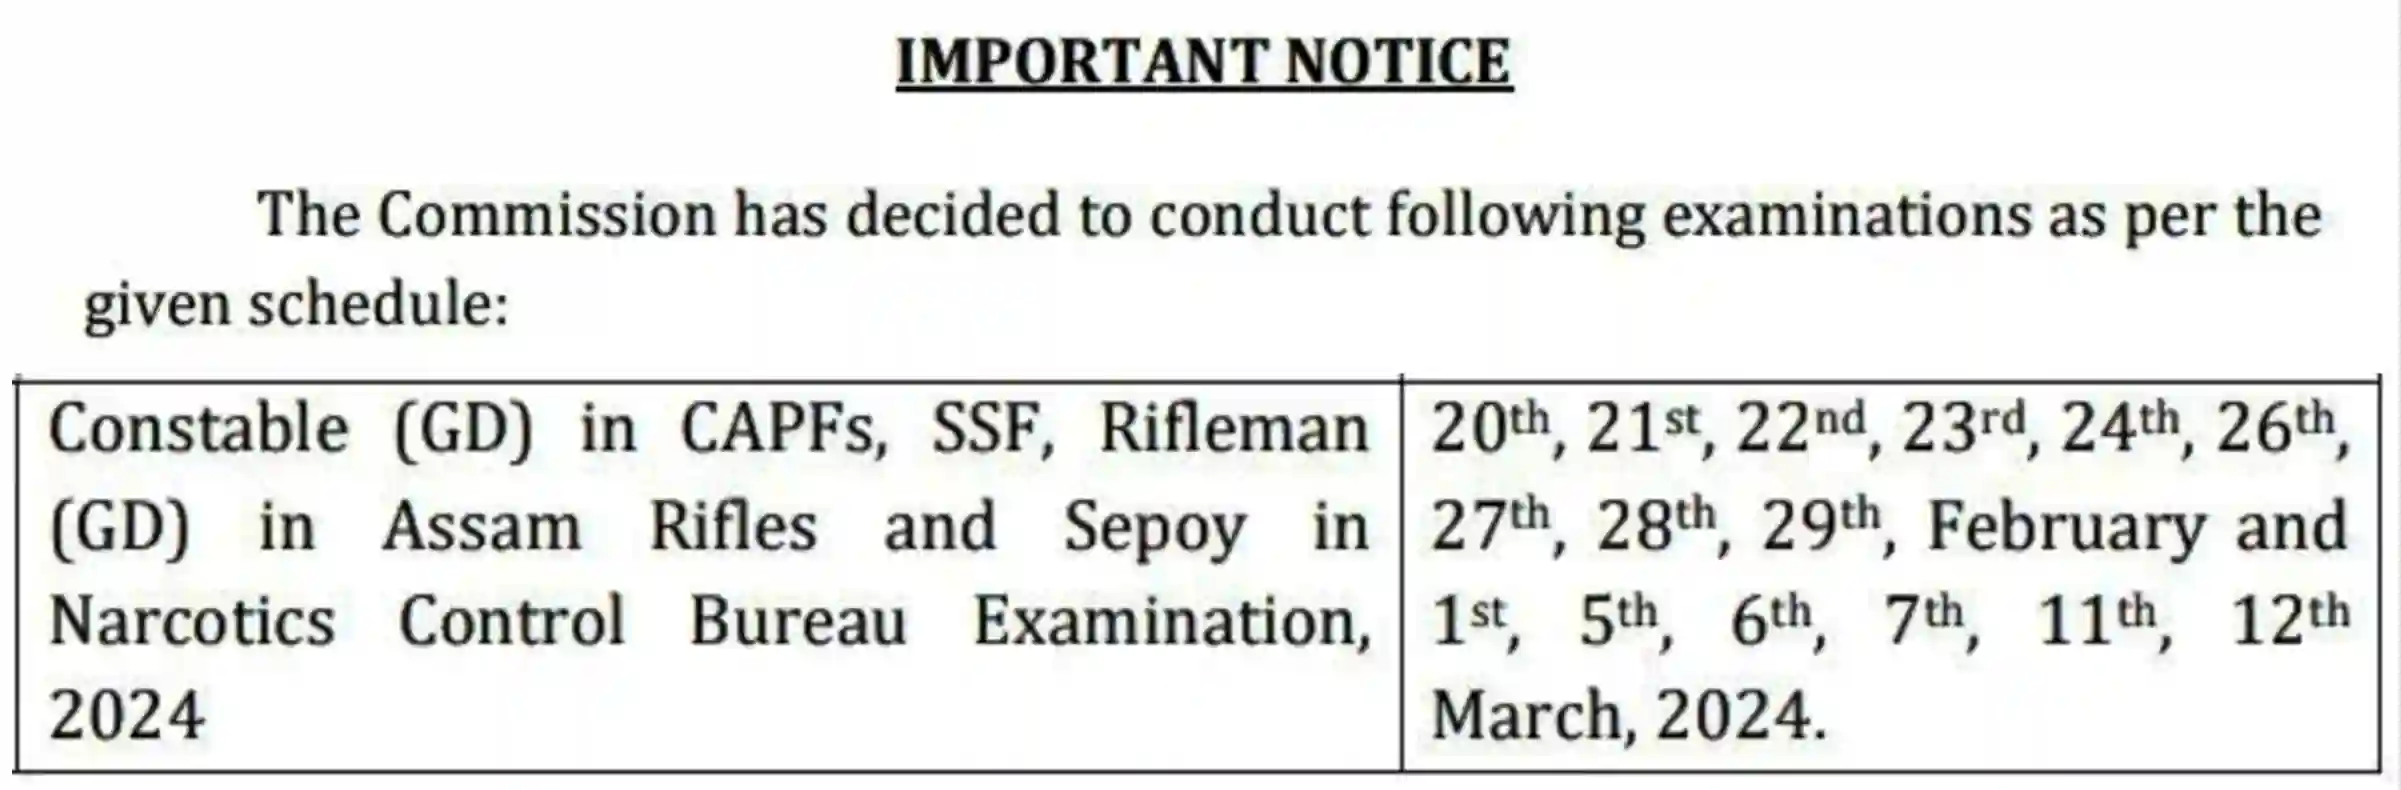 SSC GD Constable Exam Date 2023 एसएससी जीडी कांस्टेबल भर्ती 2023 की परीक्षा तिथि घोषित, ऑफिशल नोटिस जारी